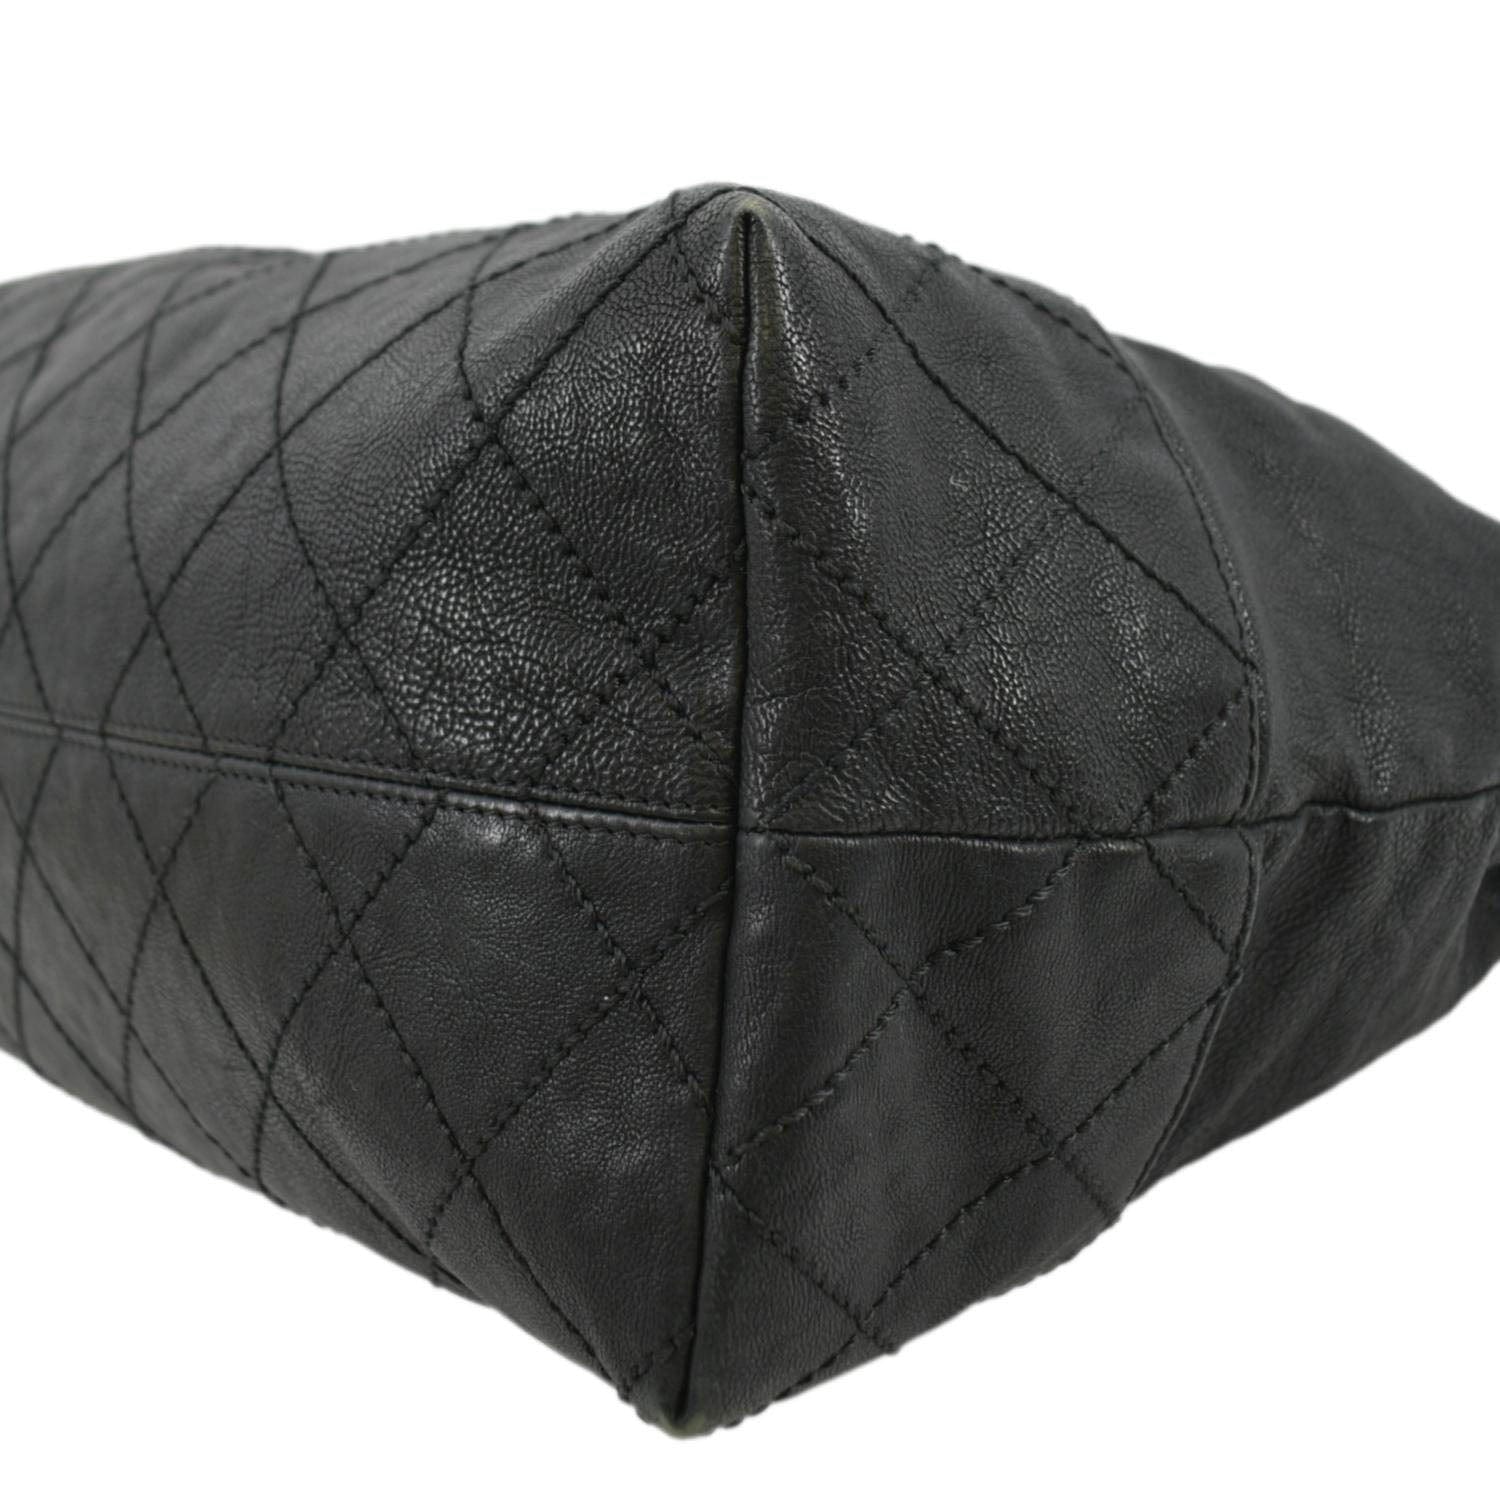 Chanel Coco Cabas Leather Shoulder Tote Bag Black